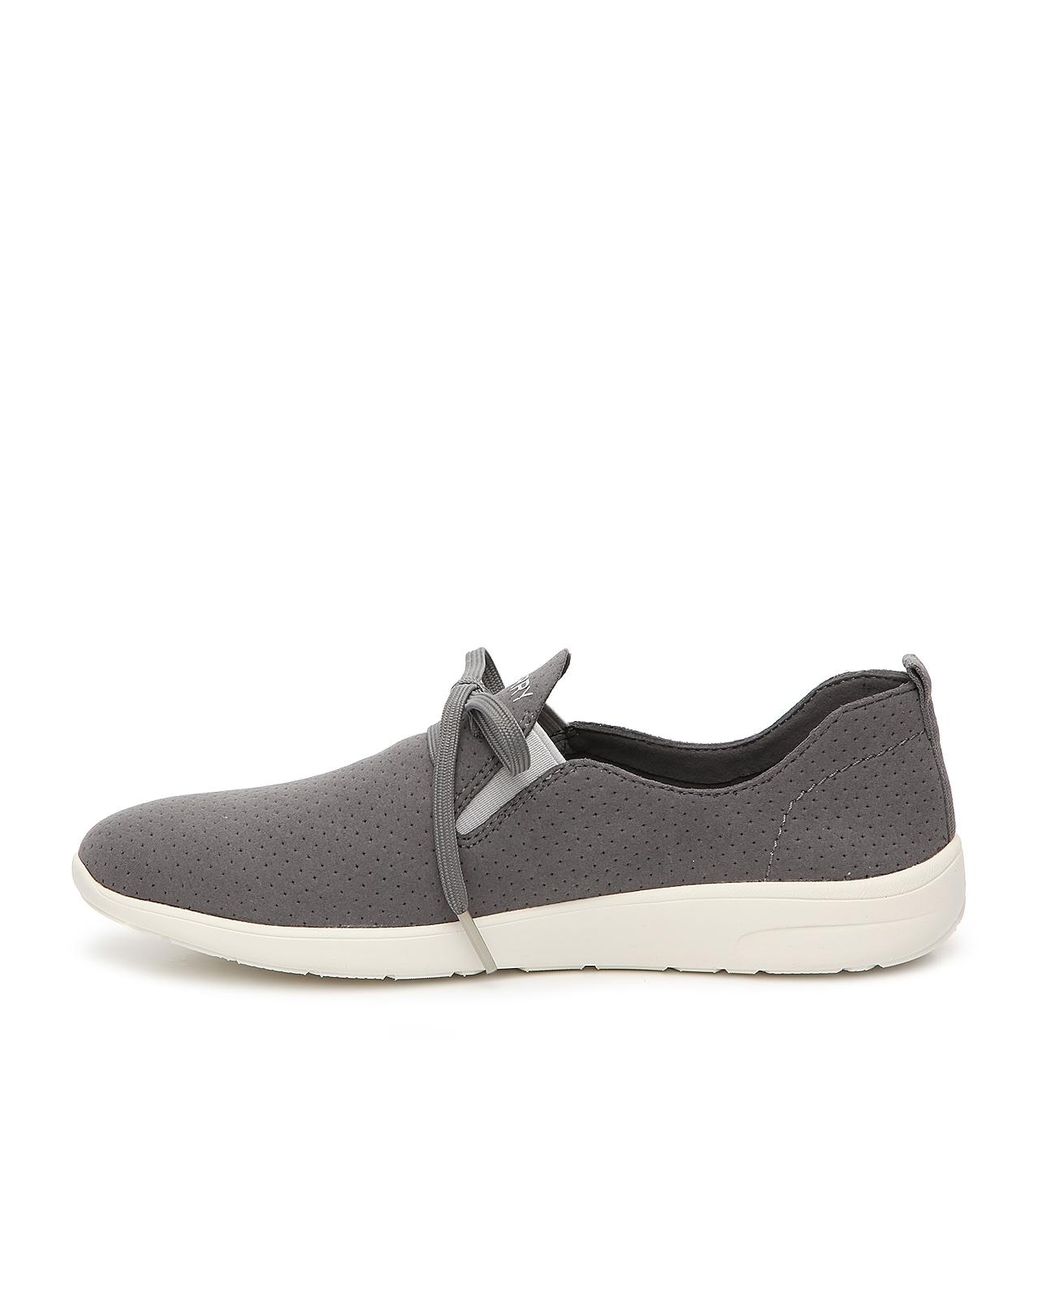 Sperry Top-Sider Rio Aqua Slip-on Sneaker in Gray | Lyst